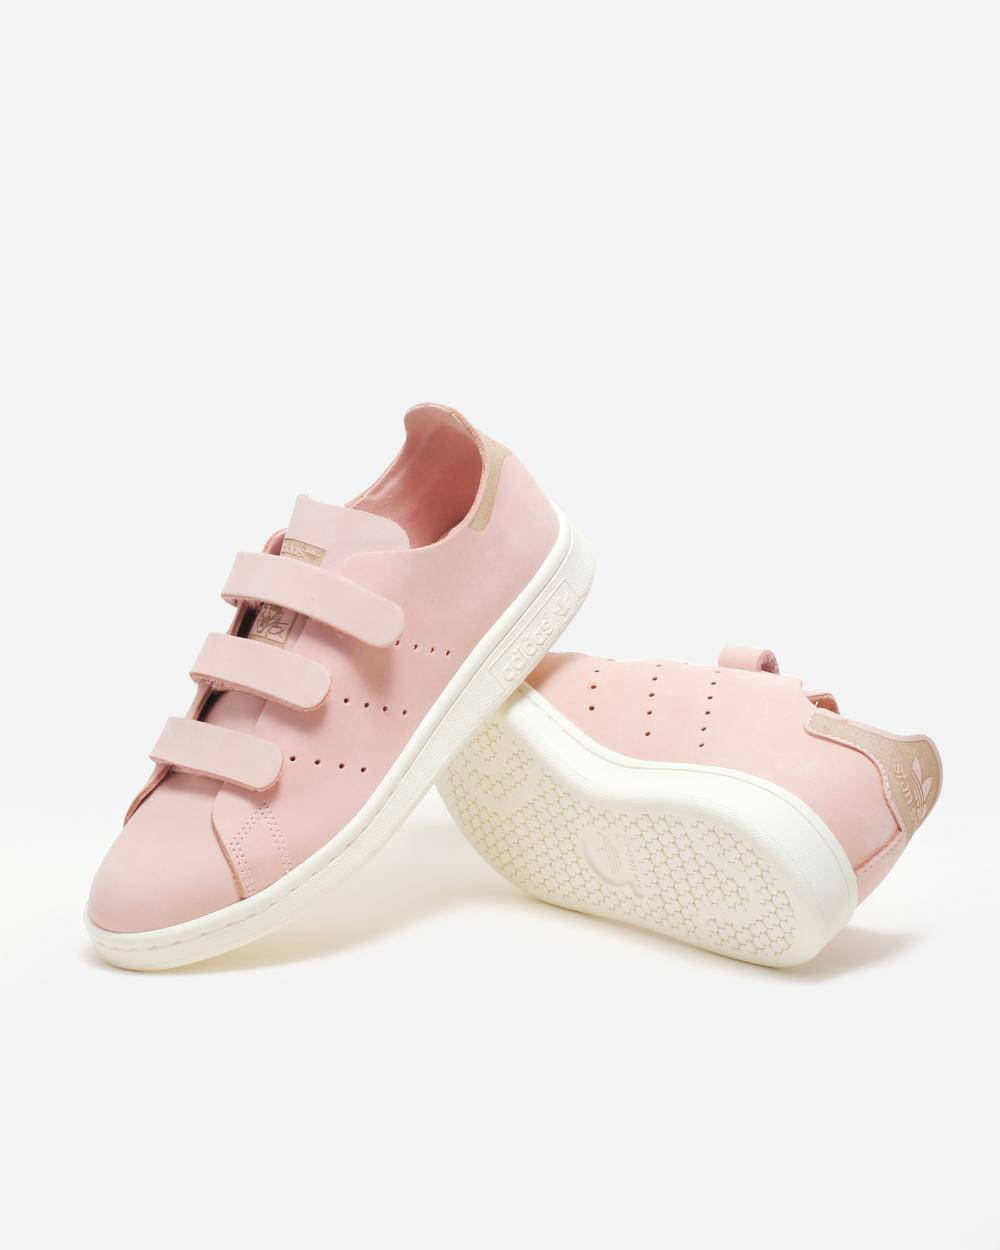 adidas-stansmith-pink4